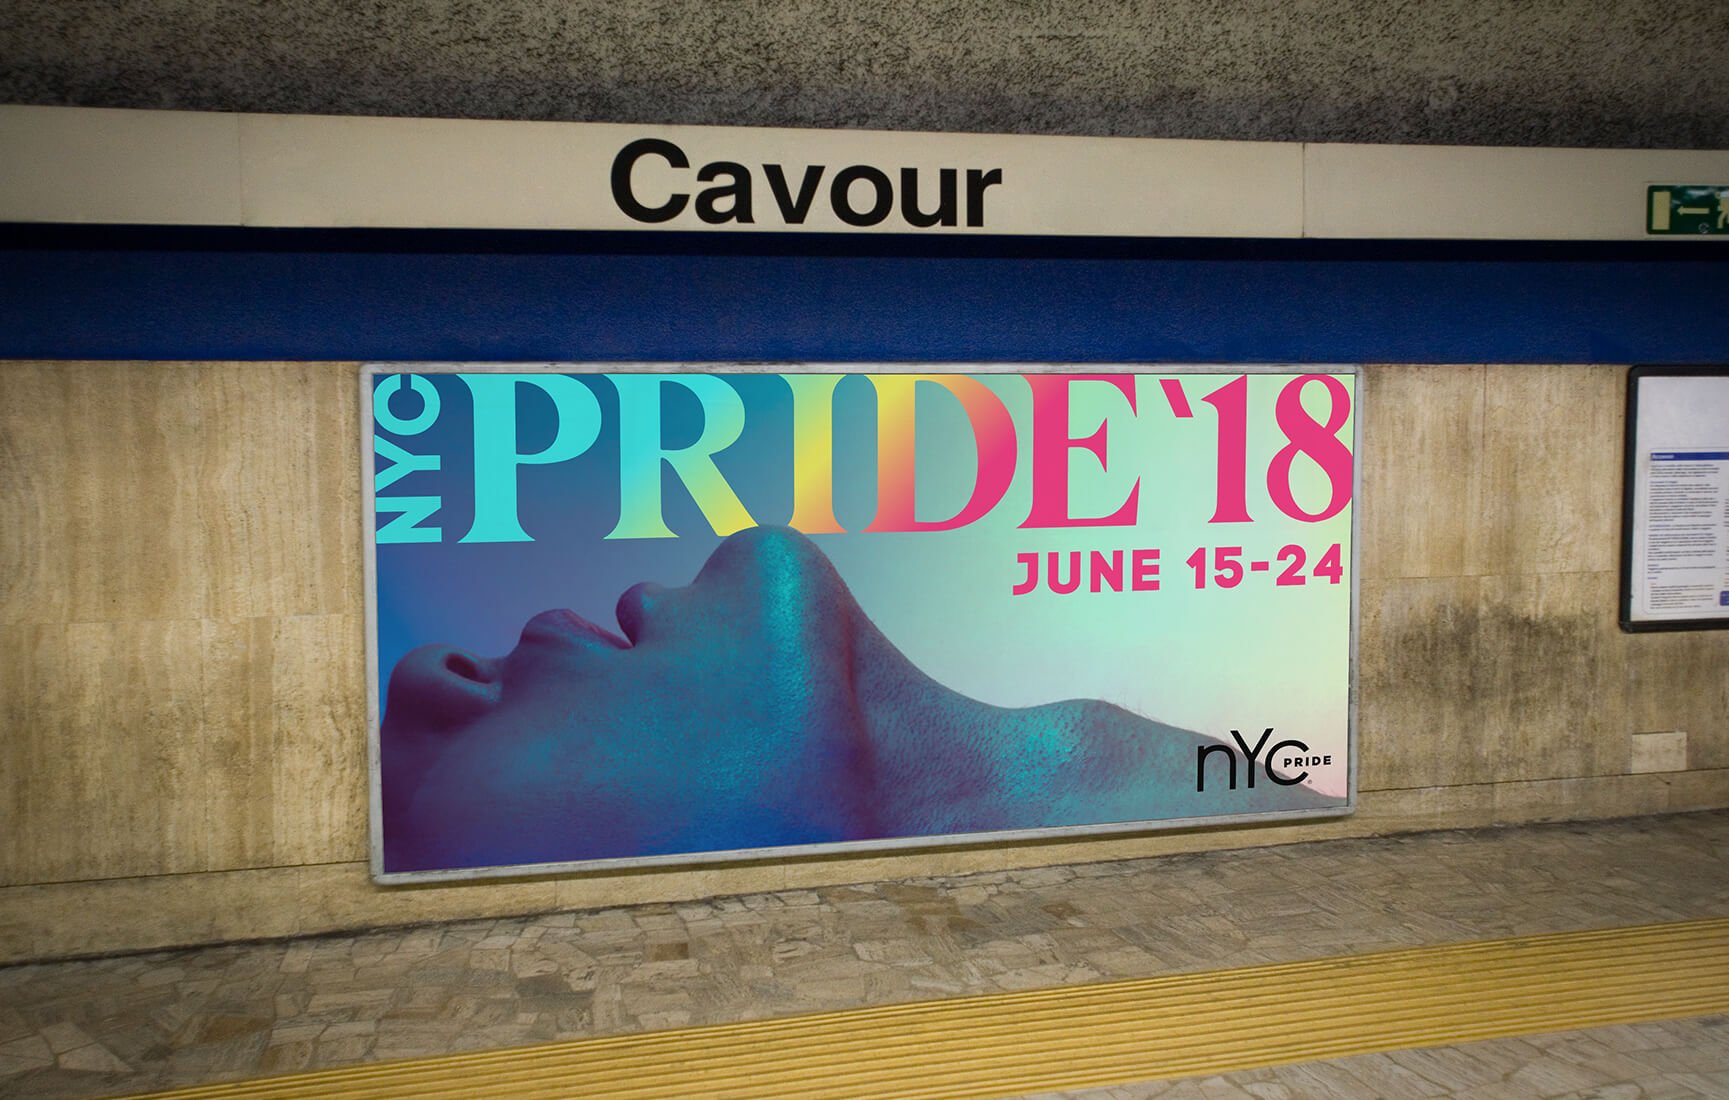 CC-Pride18-02